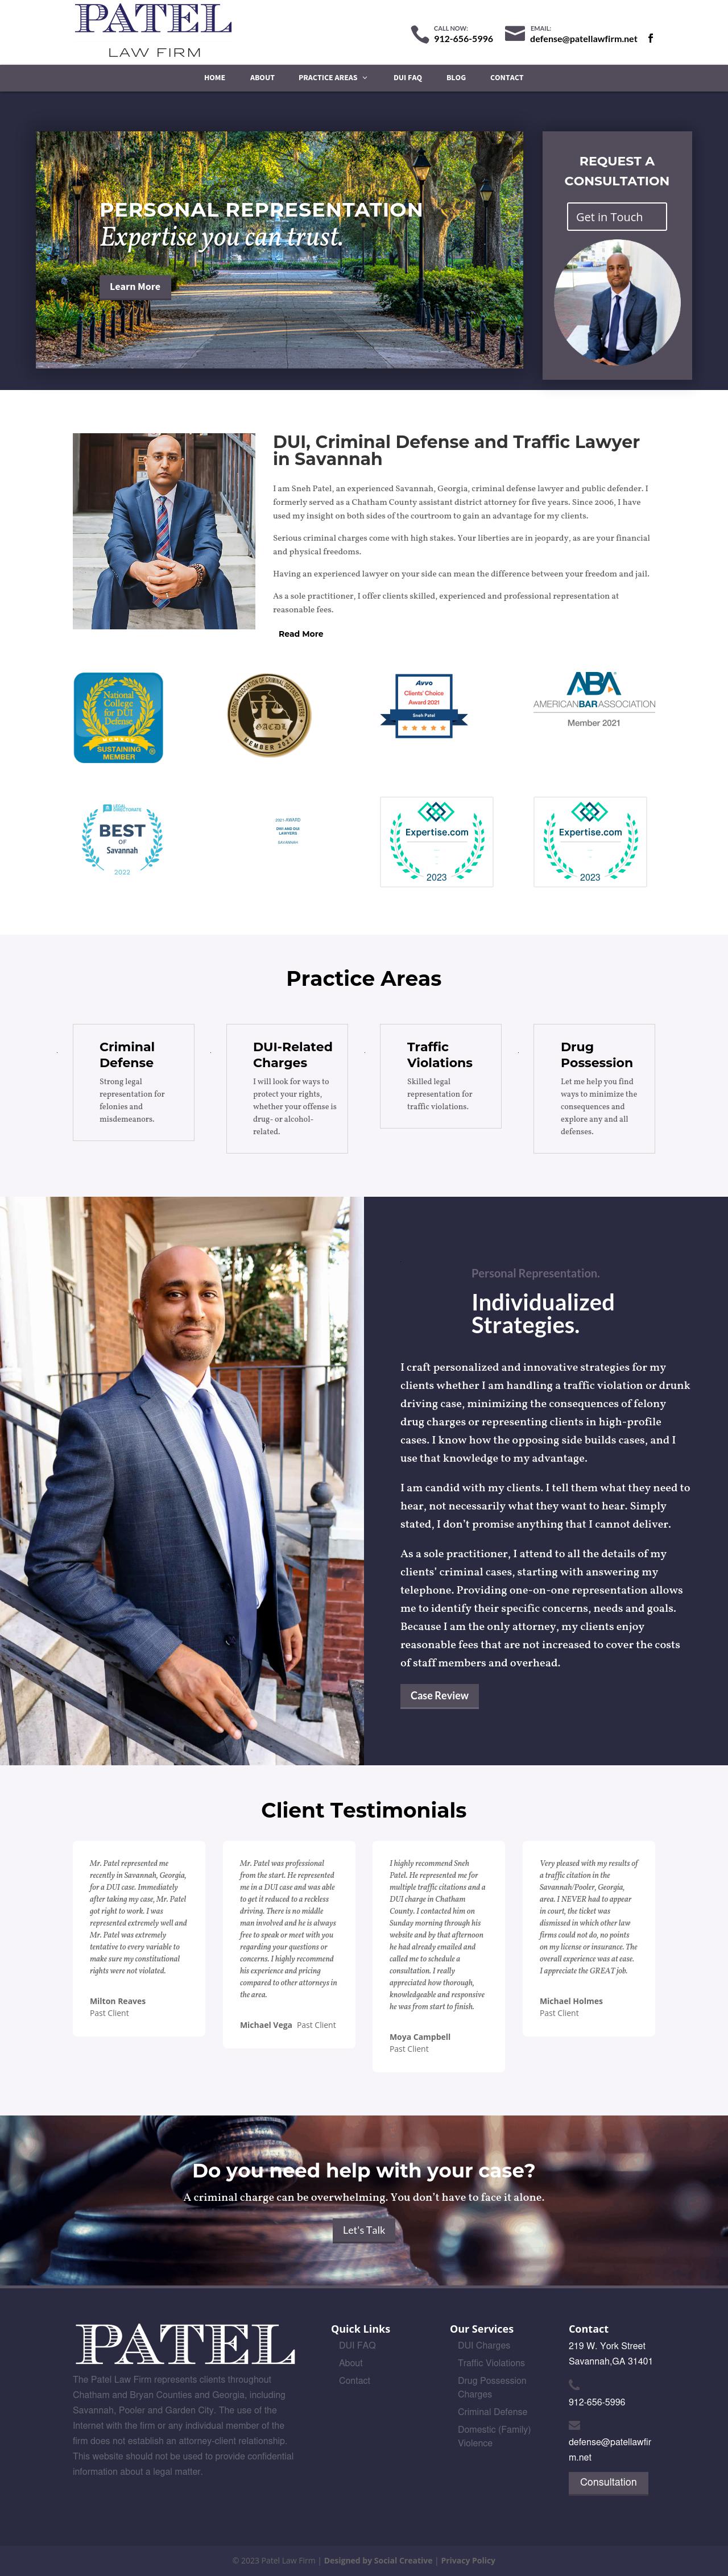 The Patel Law Firm - Savannah GA Lawyers